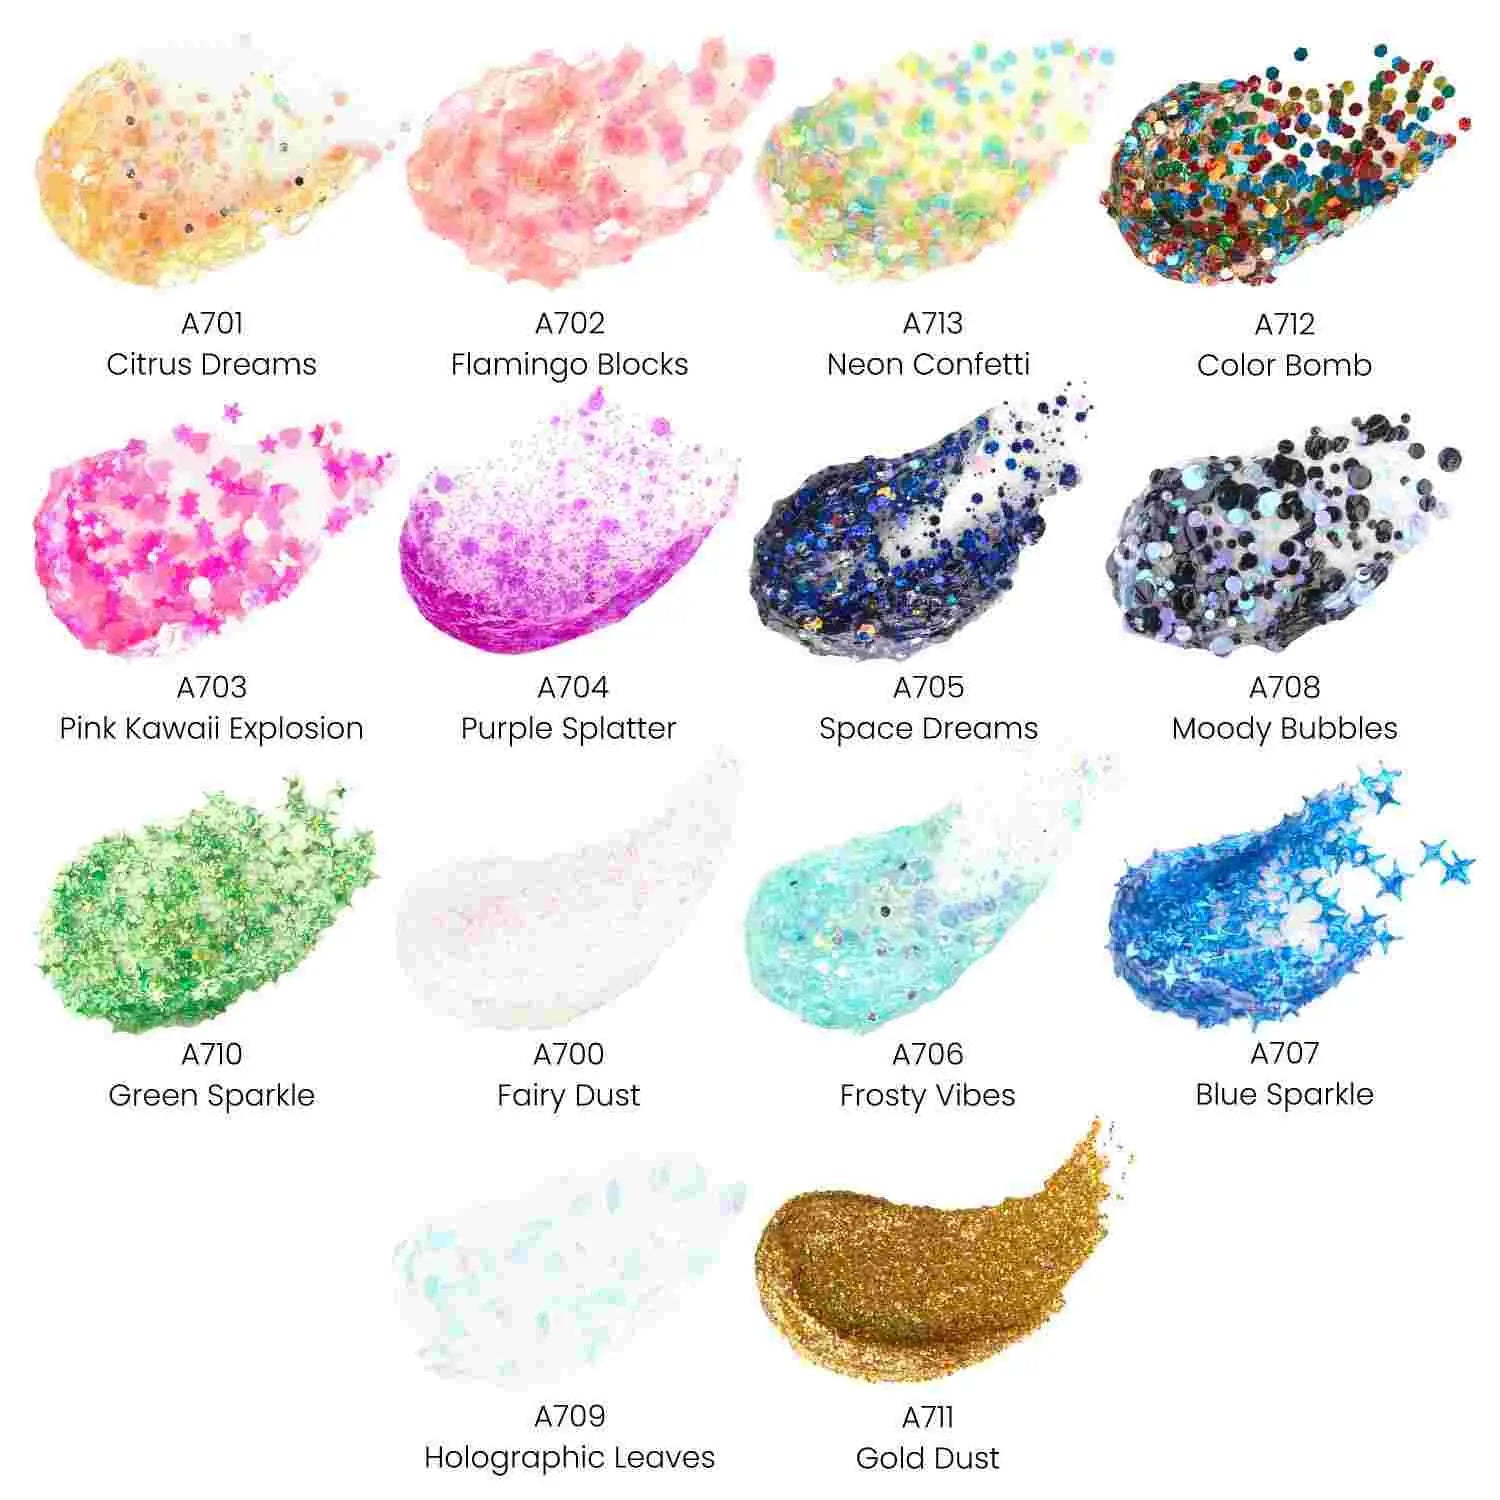 iridescent spray paint - Google Search  Iridescent, Spray pattern, Spray  paint